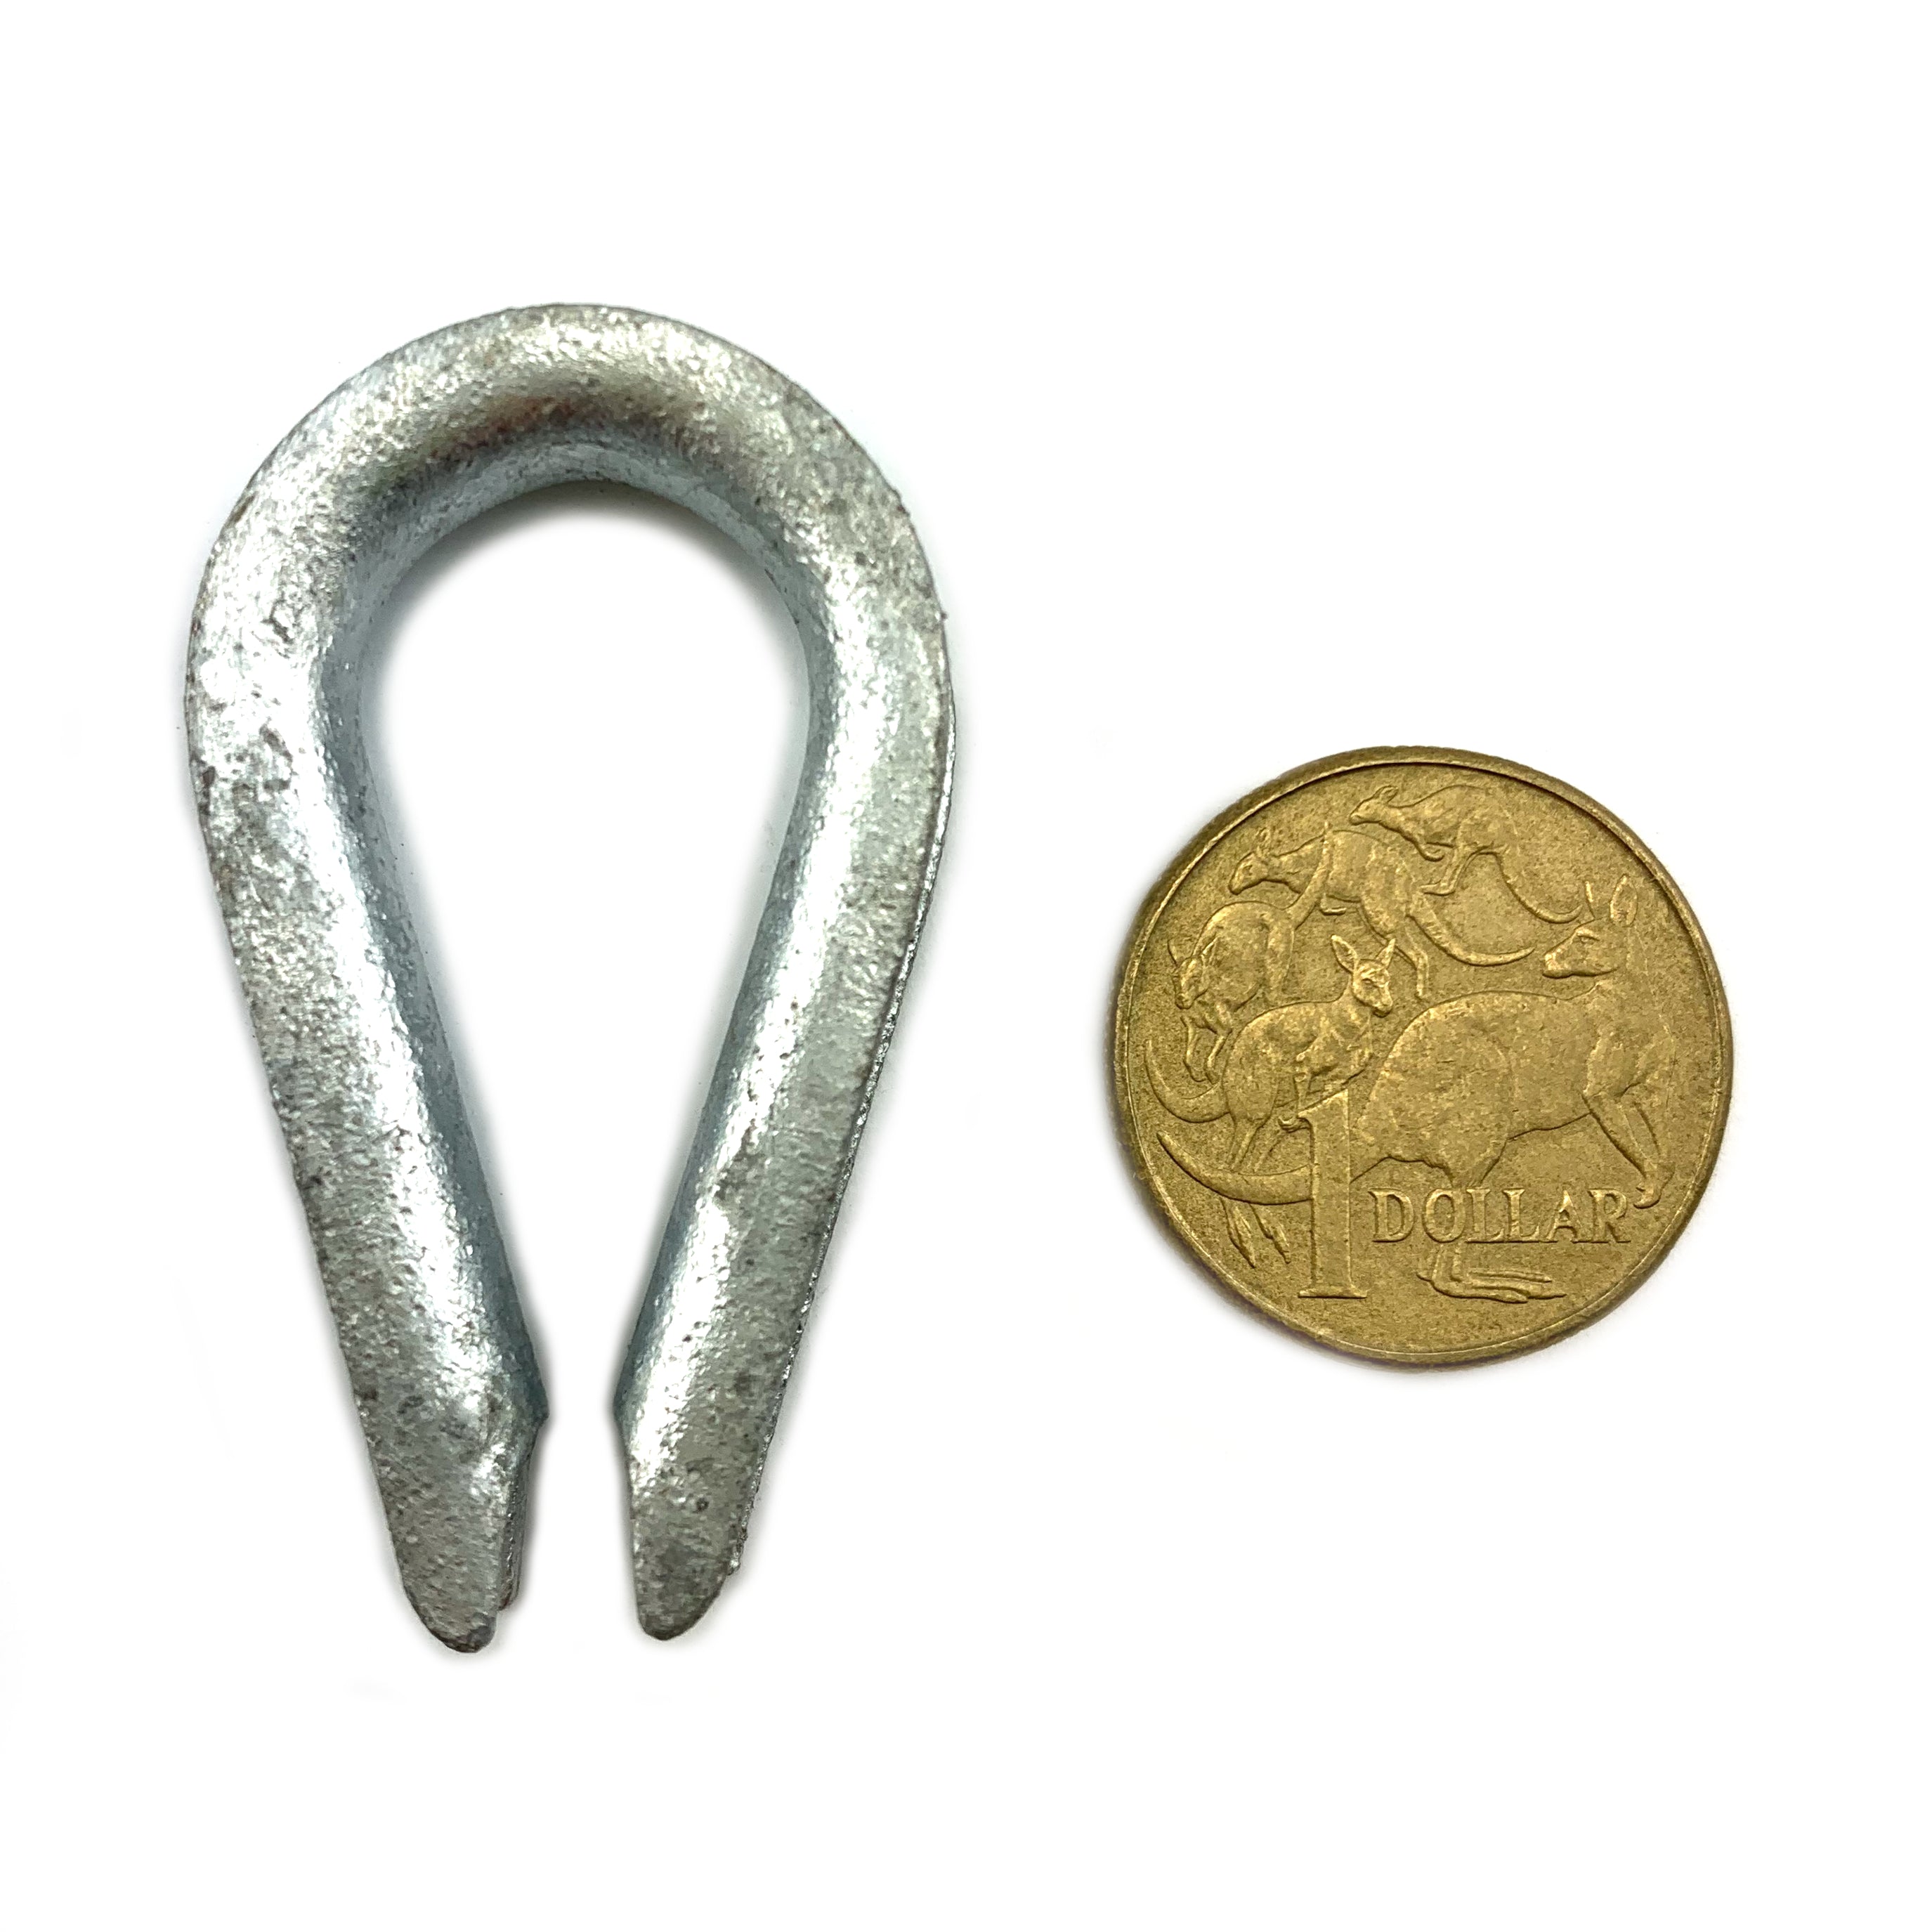 Galvanised thimble, size 5mm. Australia